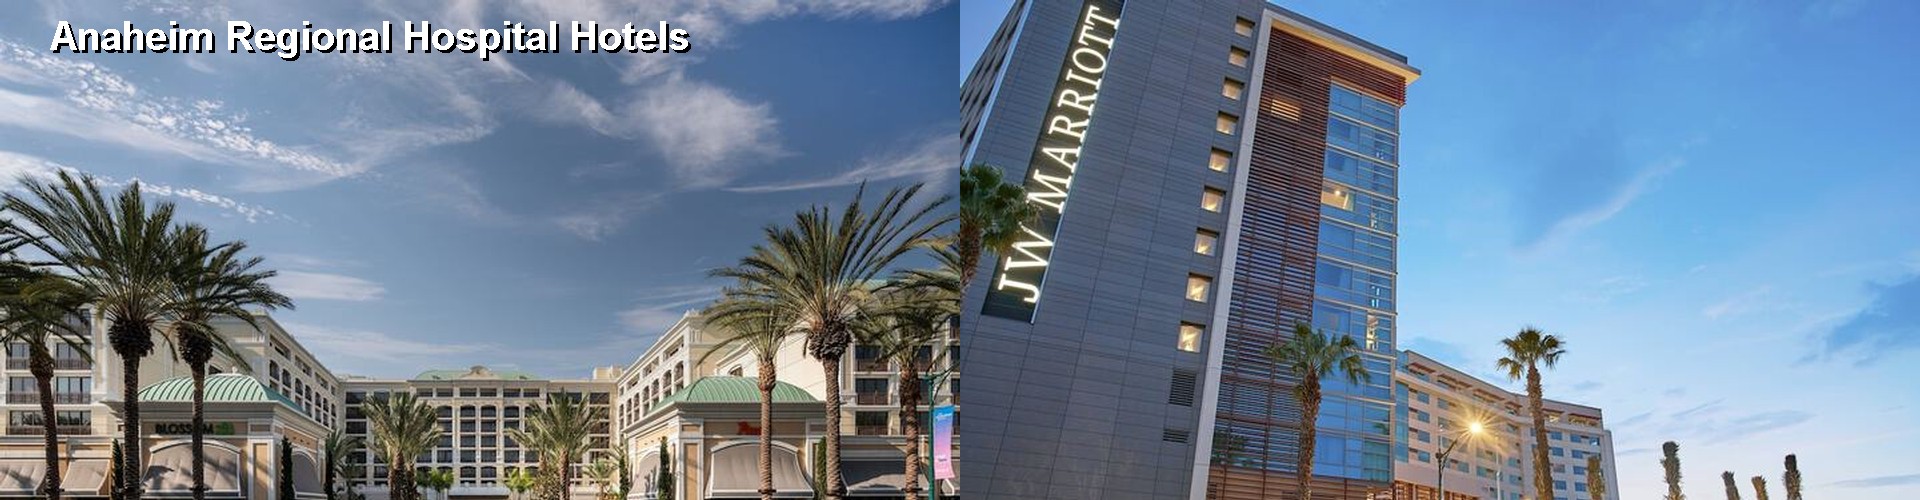 5 Best Hotels near Anaheim Regional Hospital